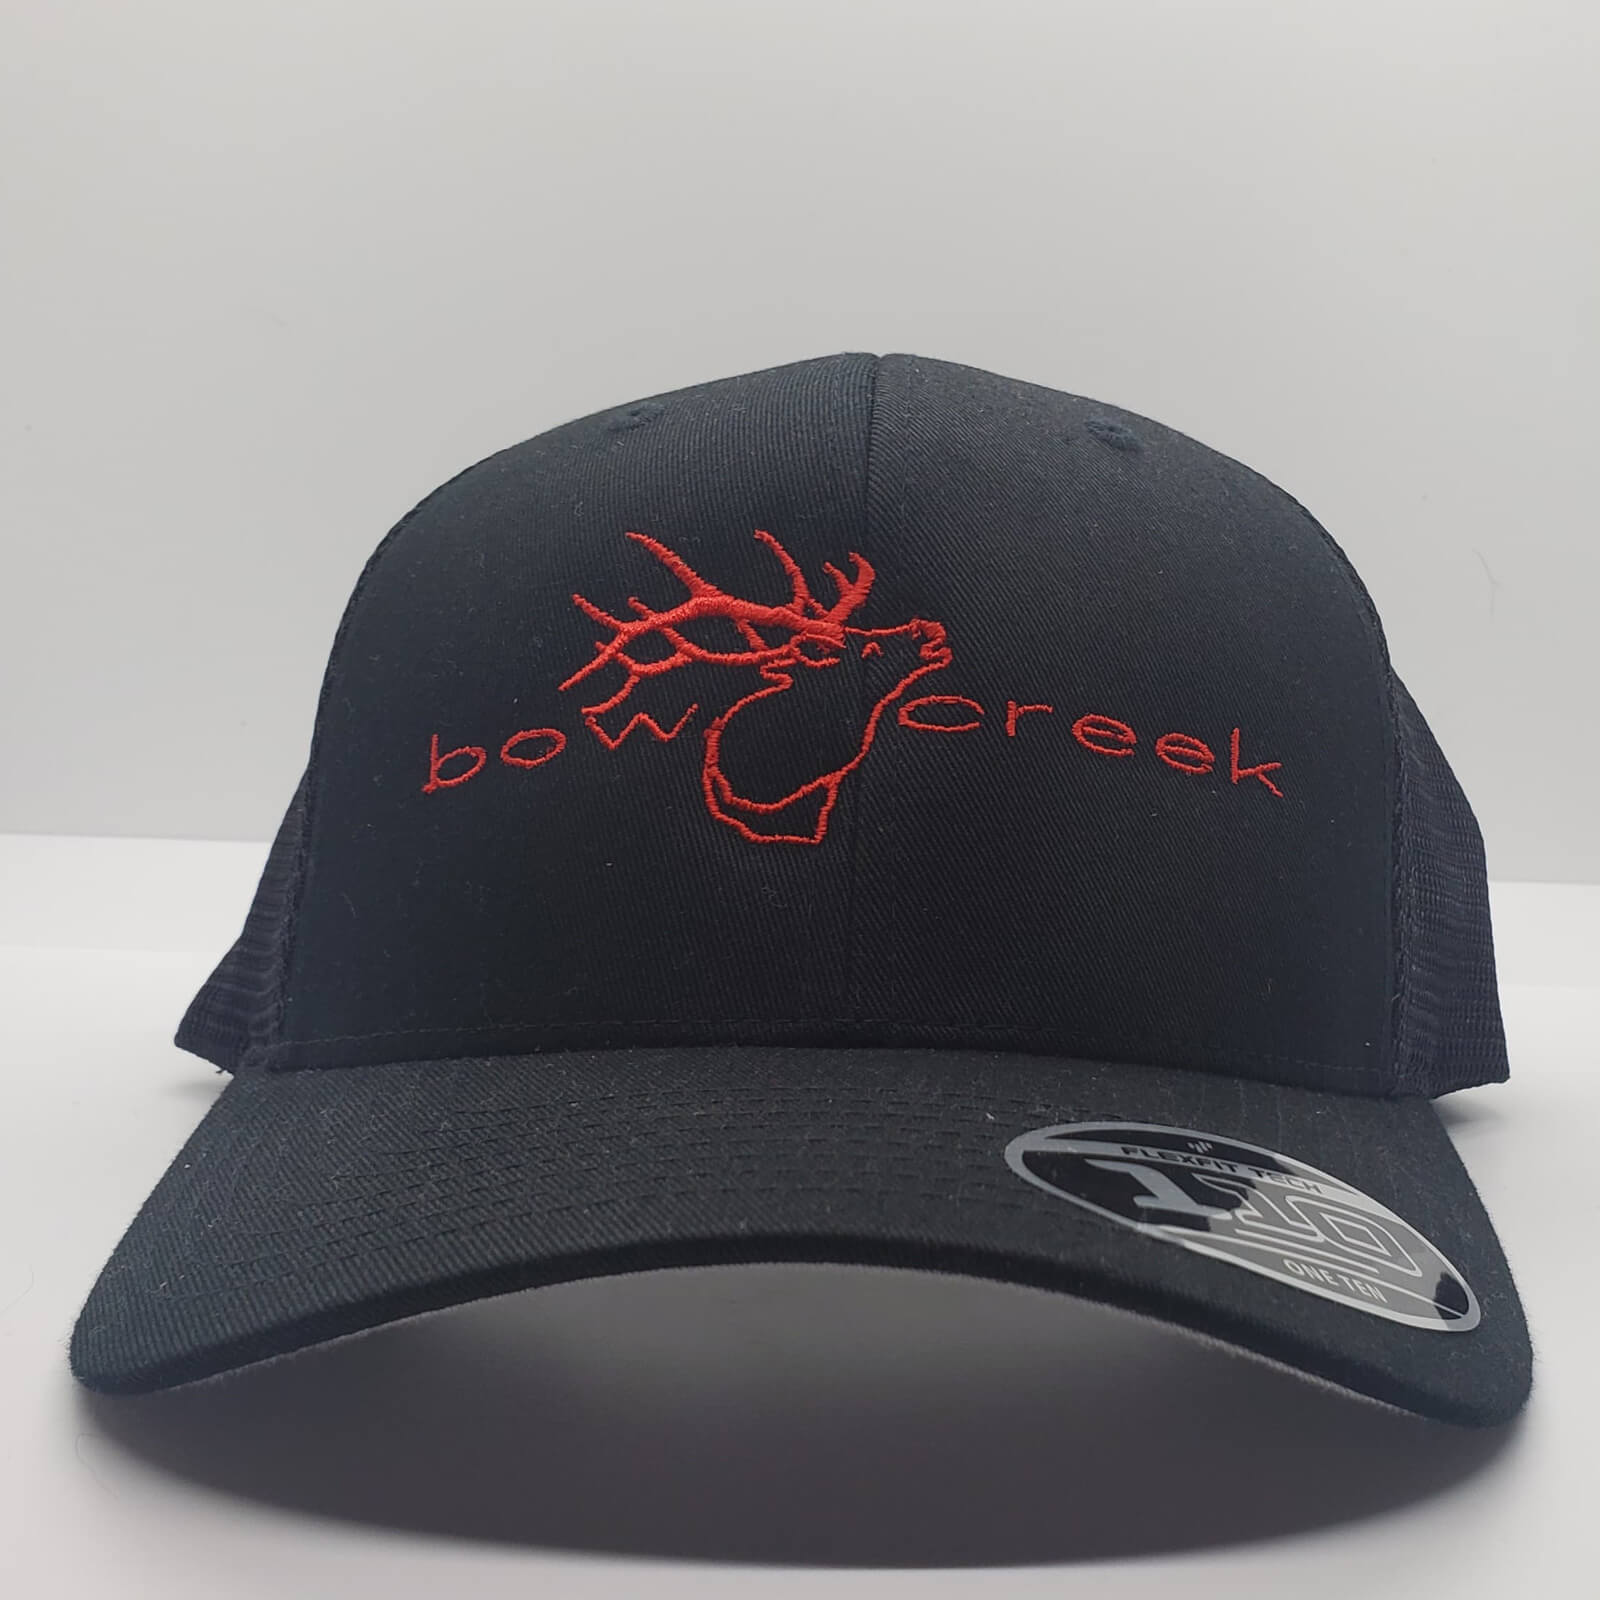 Flexfit 110 Snapback Bow Creek Elk Logo Hat - Black - Bow Creek Outdoors